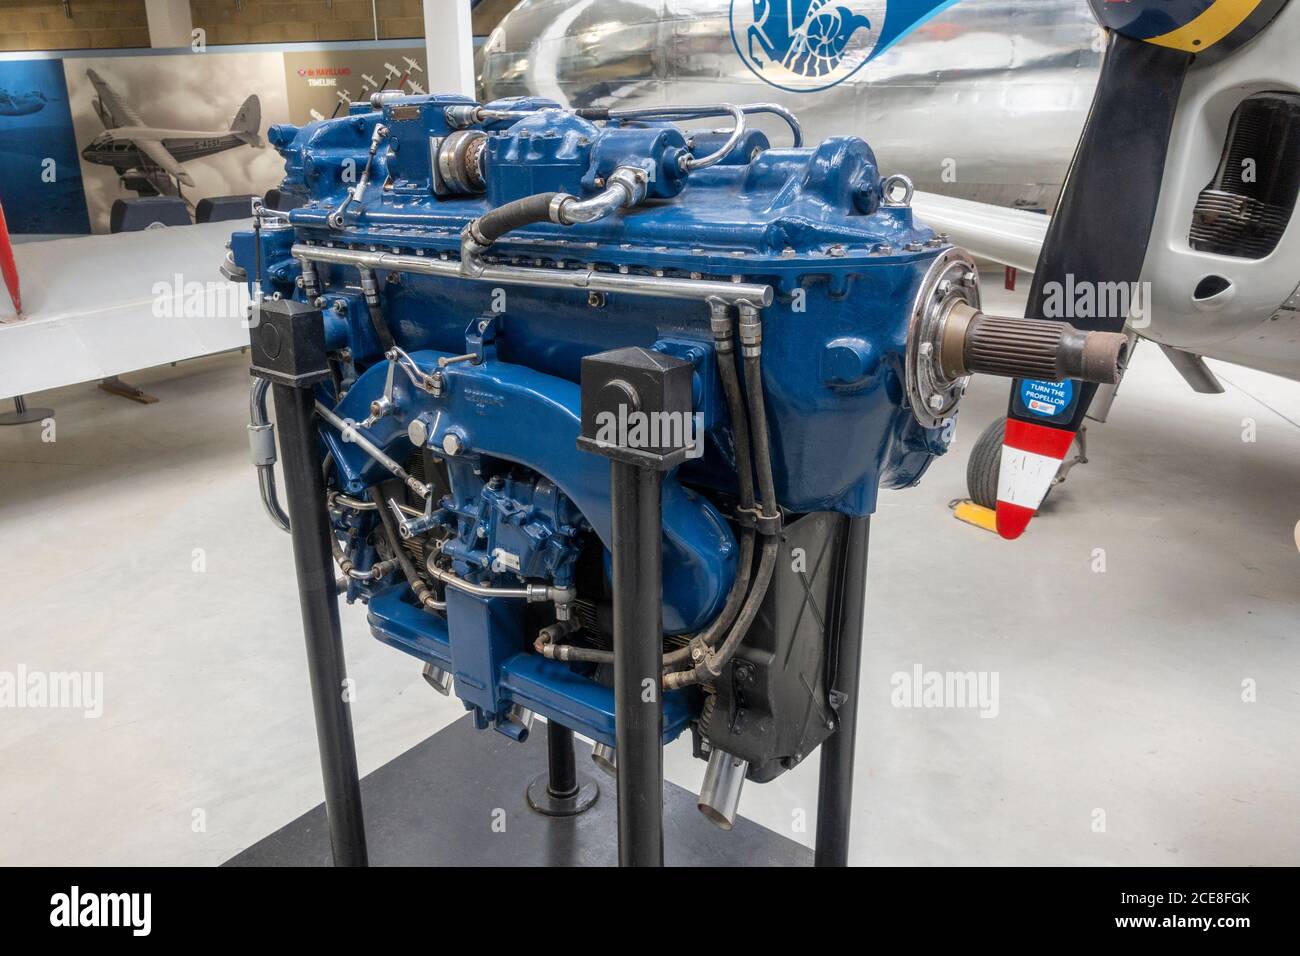 A Gipsy Major 31 plane engine (160 BHP) on display in the De Havilland Museum, London Colney, UK. Stock Photo